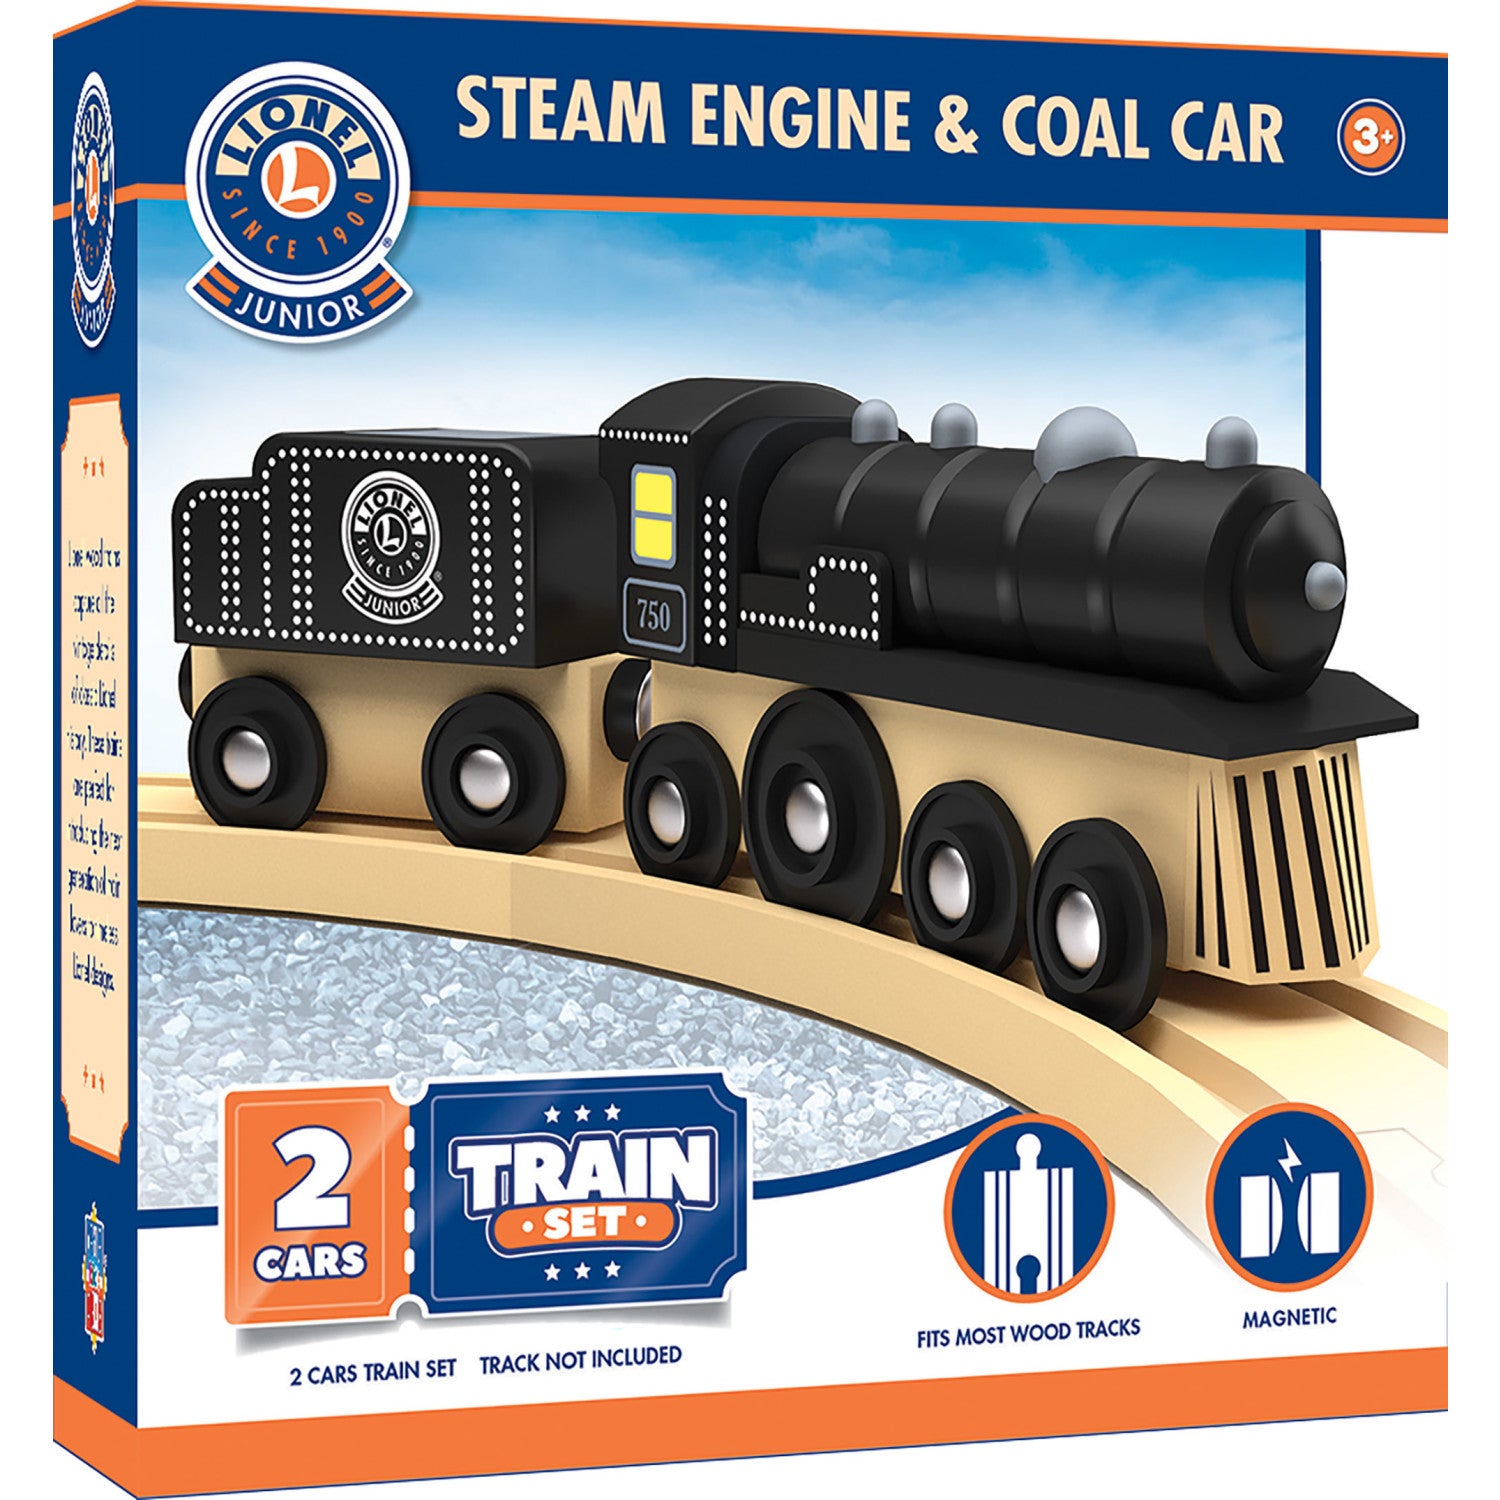 Lionel - Steam Engine & Coal Car Toy Train Set